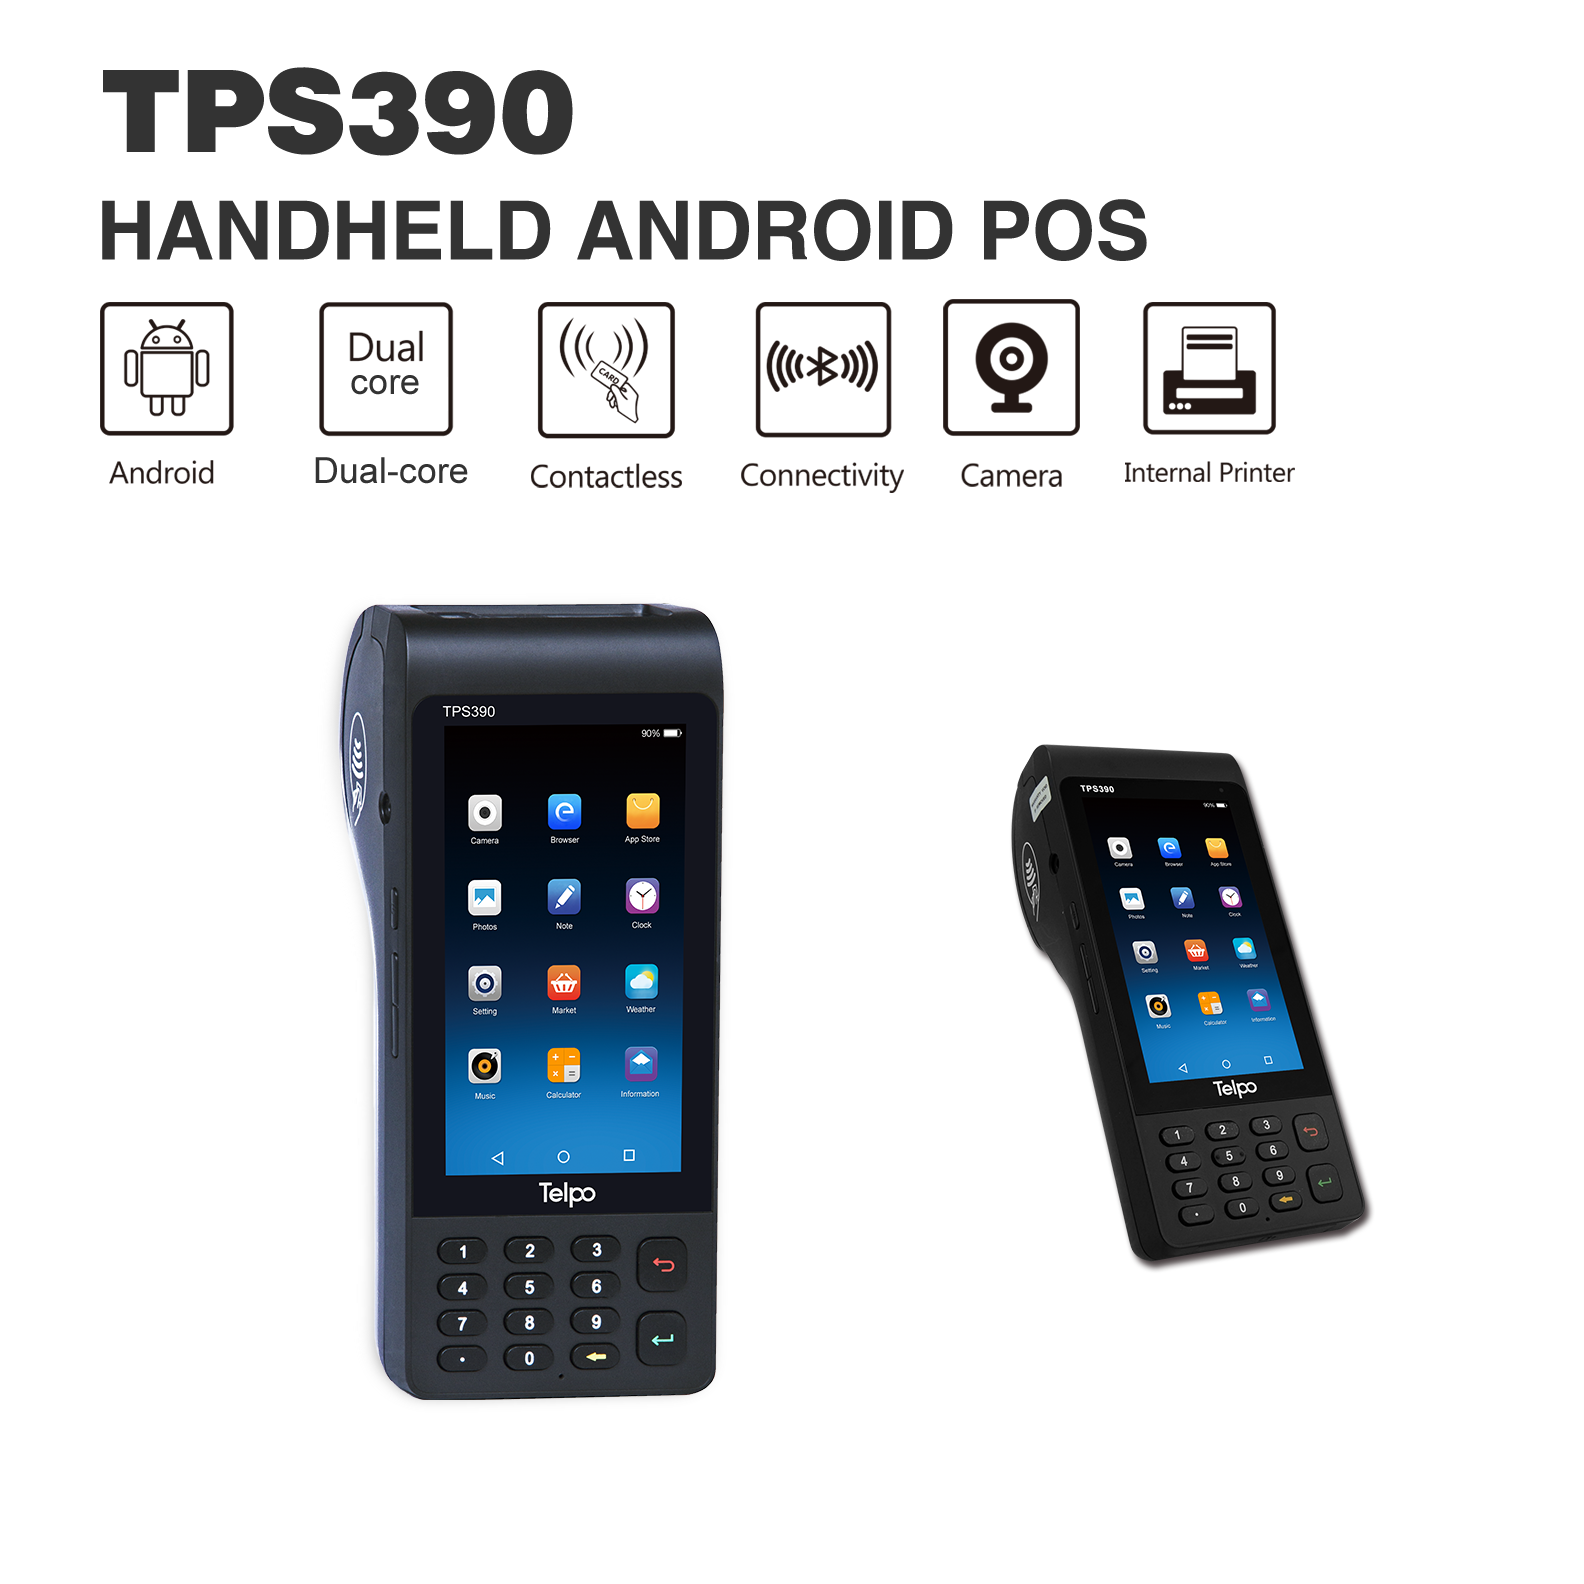 Telpo-Handheld Barcode Scanner Android Pos Machine Tps390 - Telpo